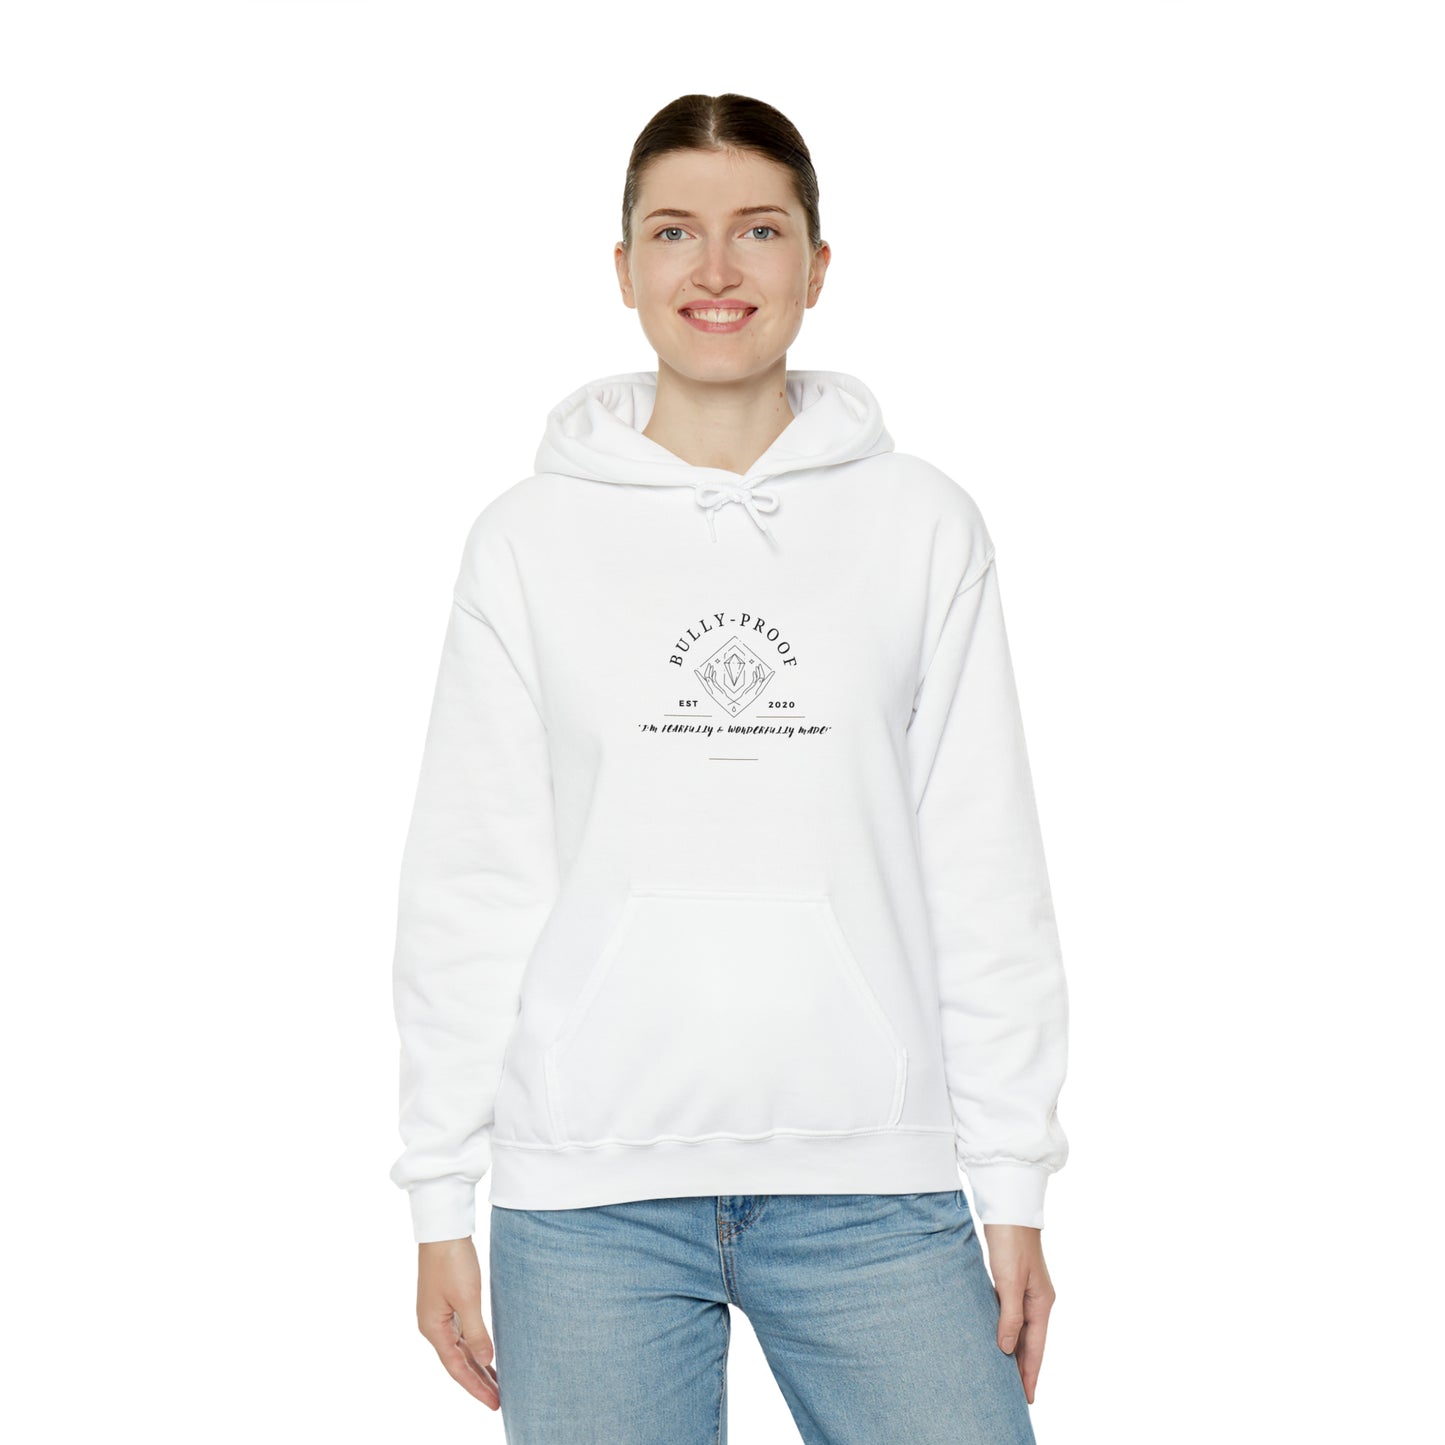 Bully-Proof Logo Unisex Heavy Blend™ Hooded Sweatshirt